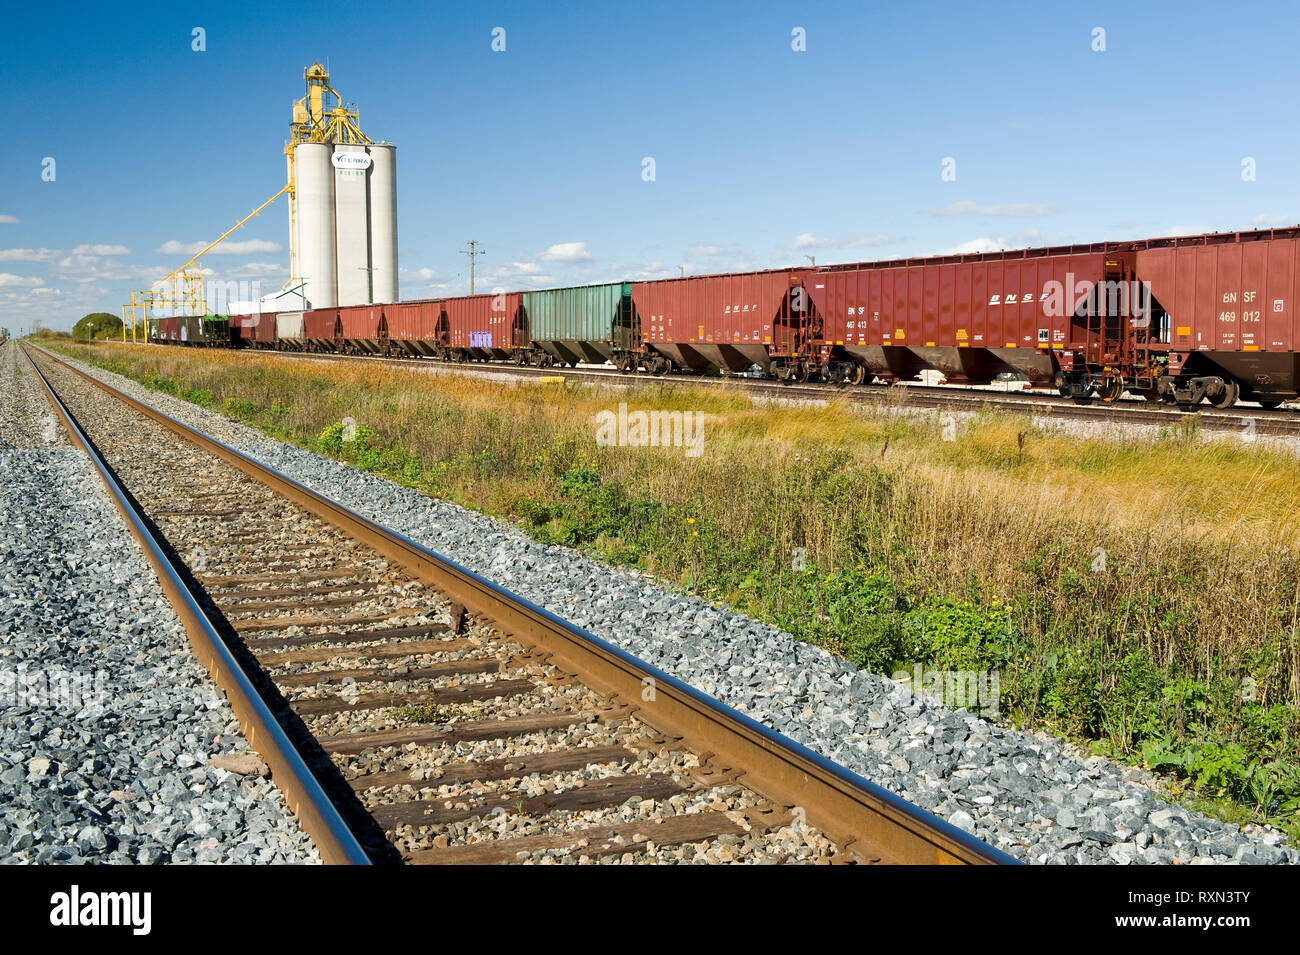 rail hopper cars wait on a siding next to an inland grain terminal, Rosser, Manitoba, Canada Stock Photo